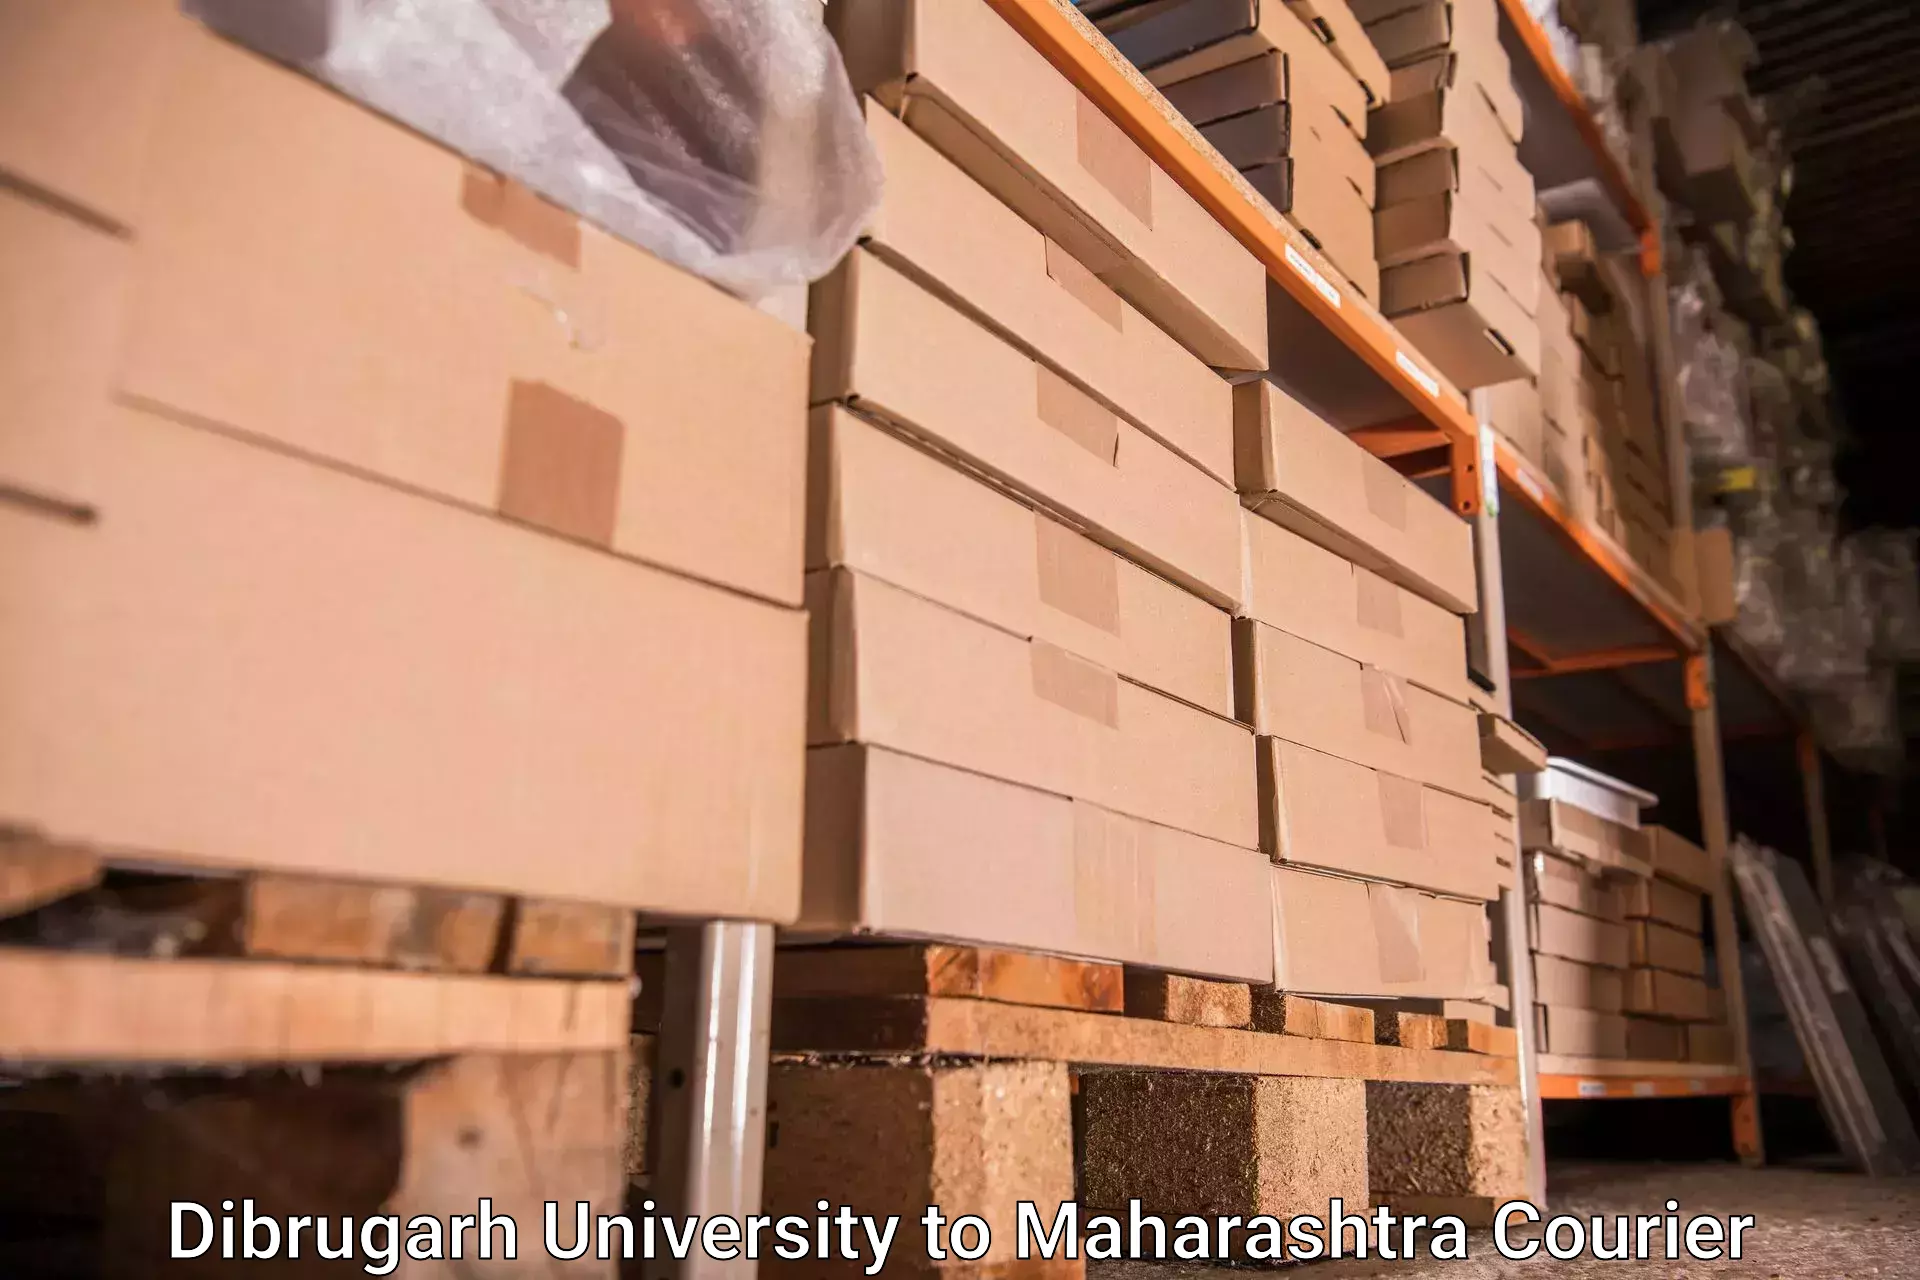 Luggage transport company Dibrugarh University to Rahimatpur